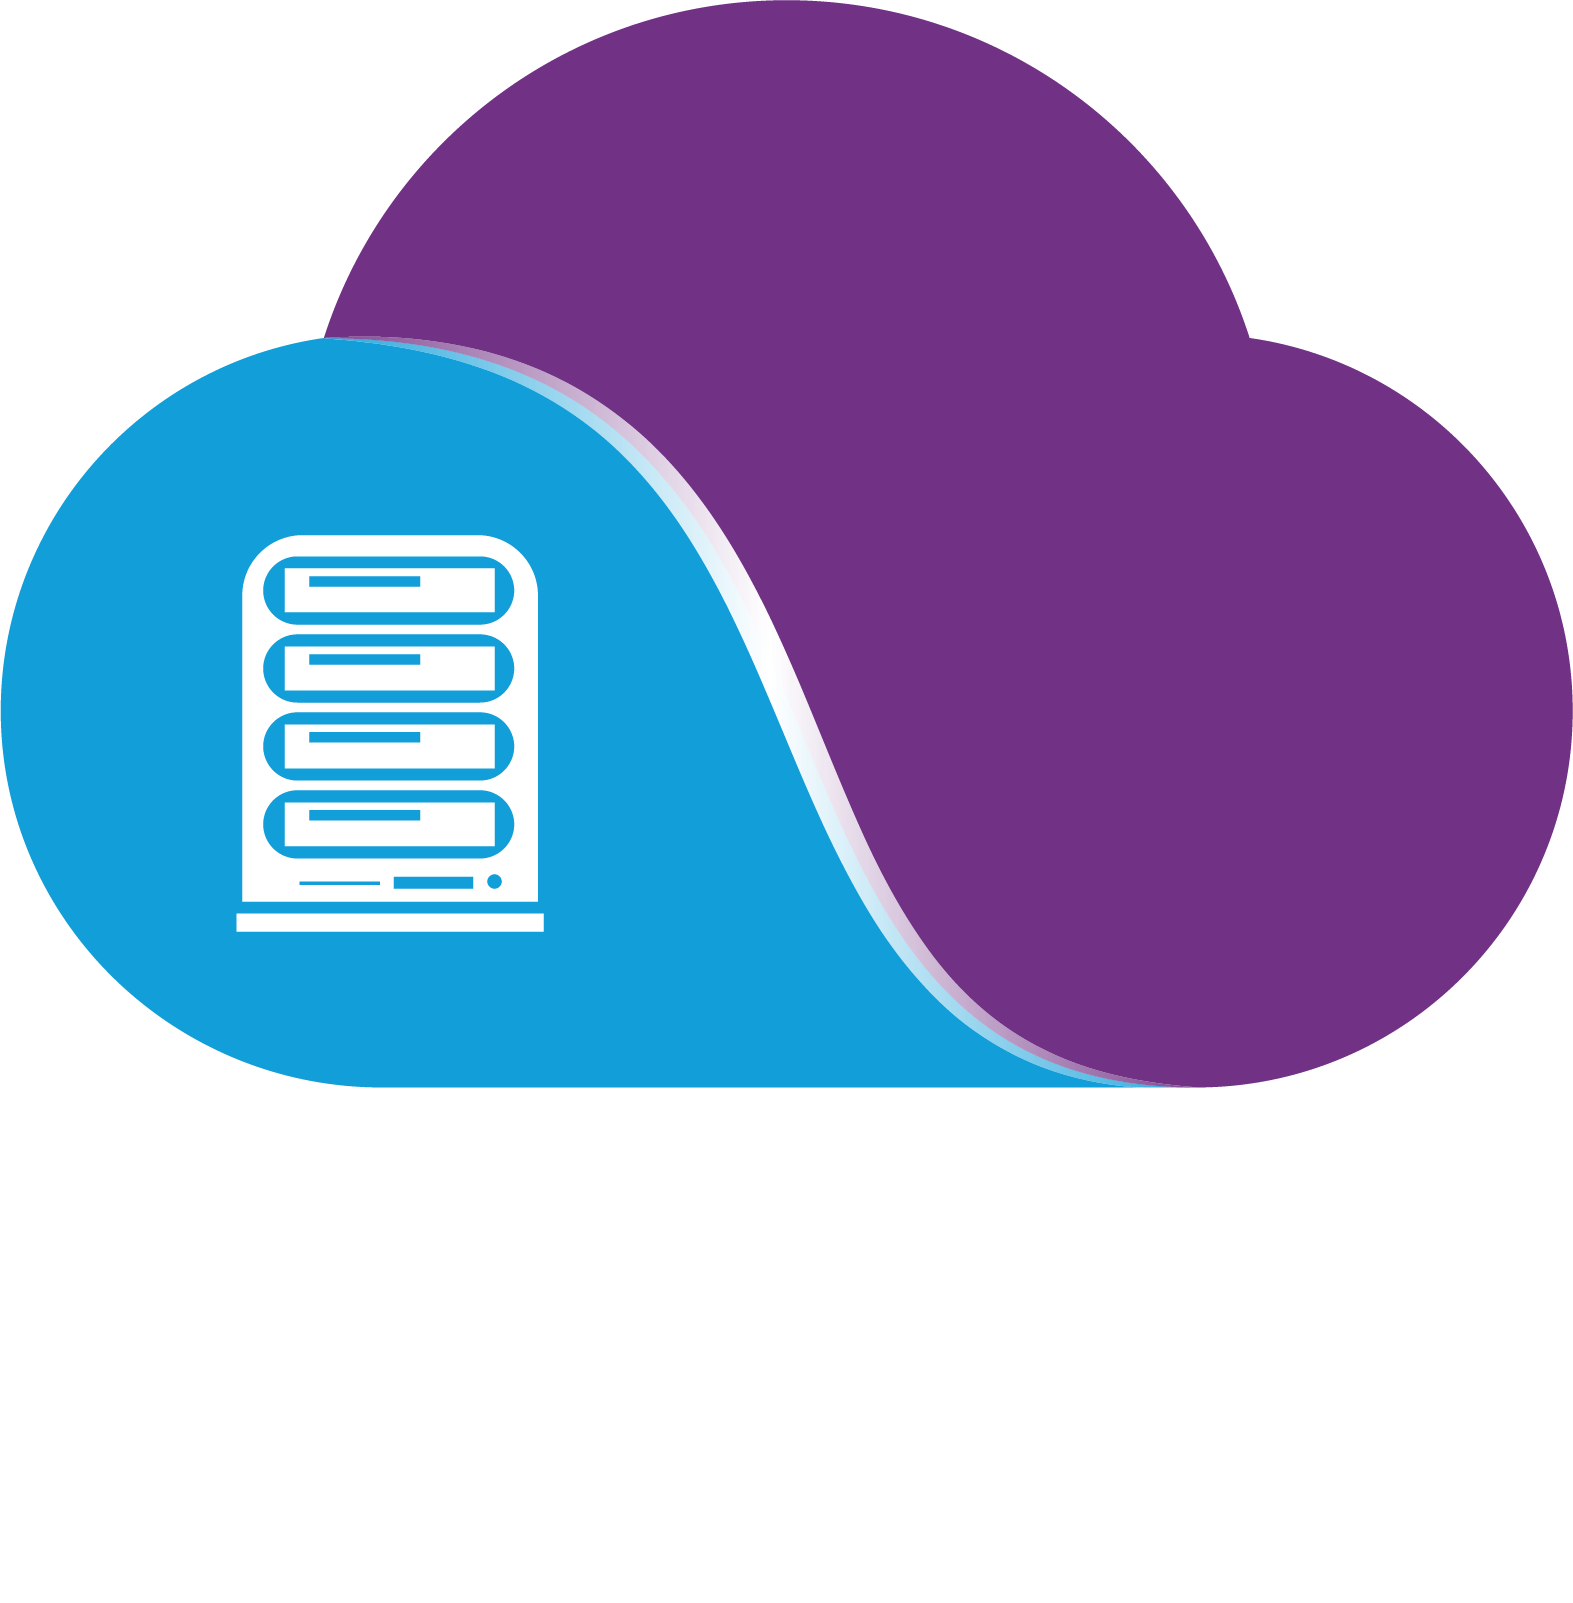 Icone CloudDirect IaaS-PaaS texte blanc